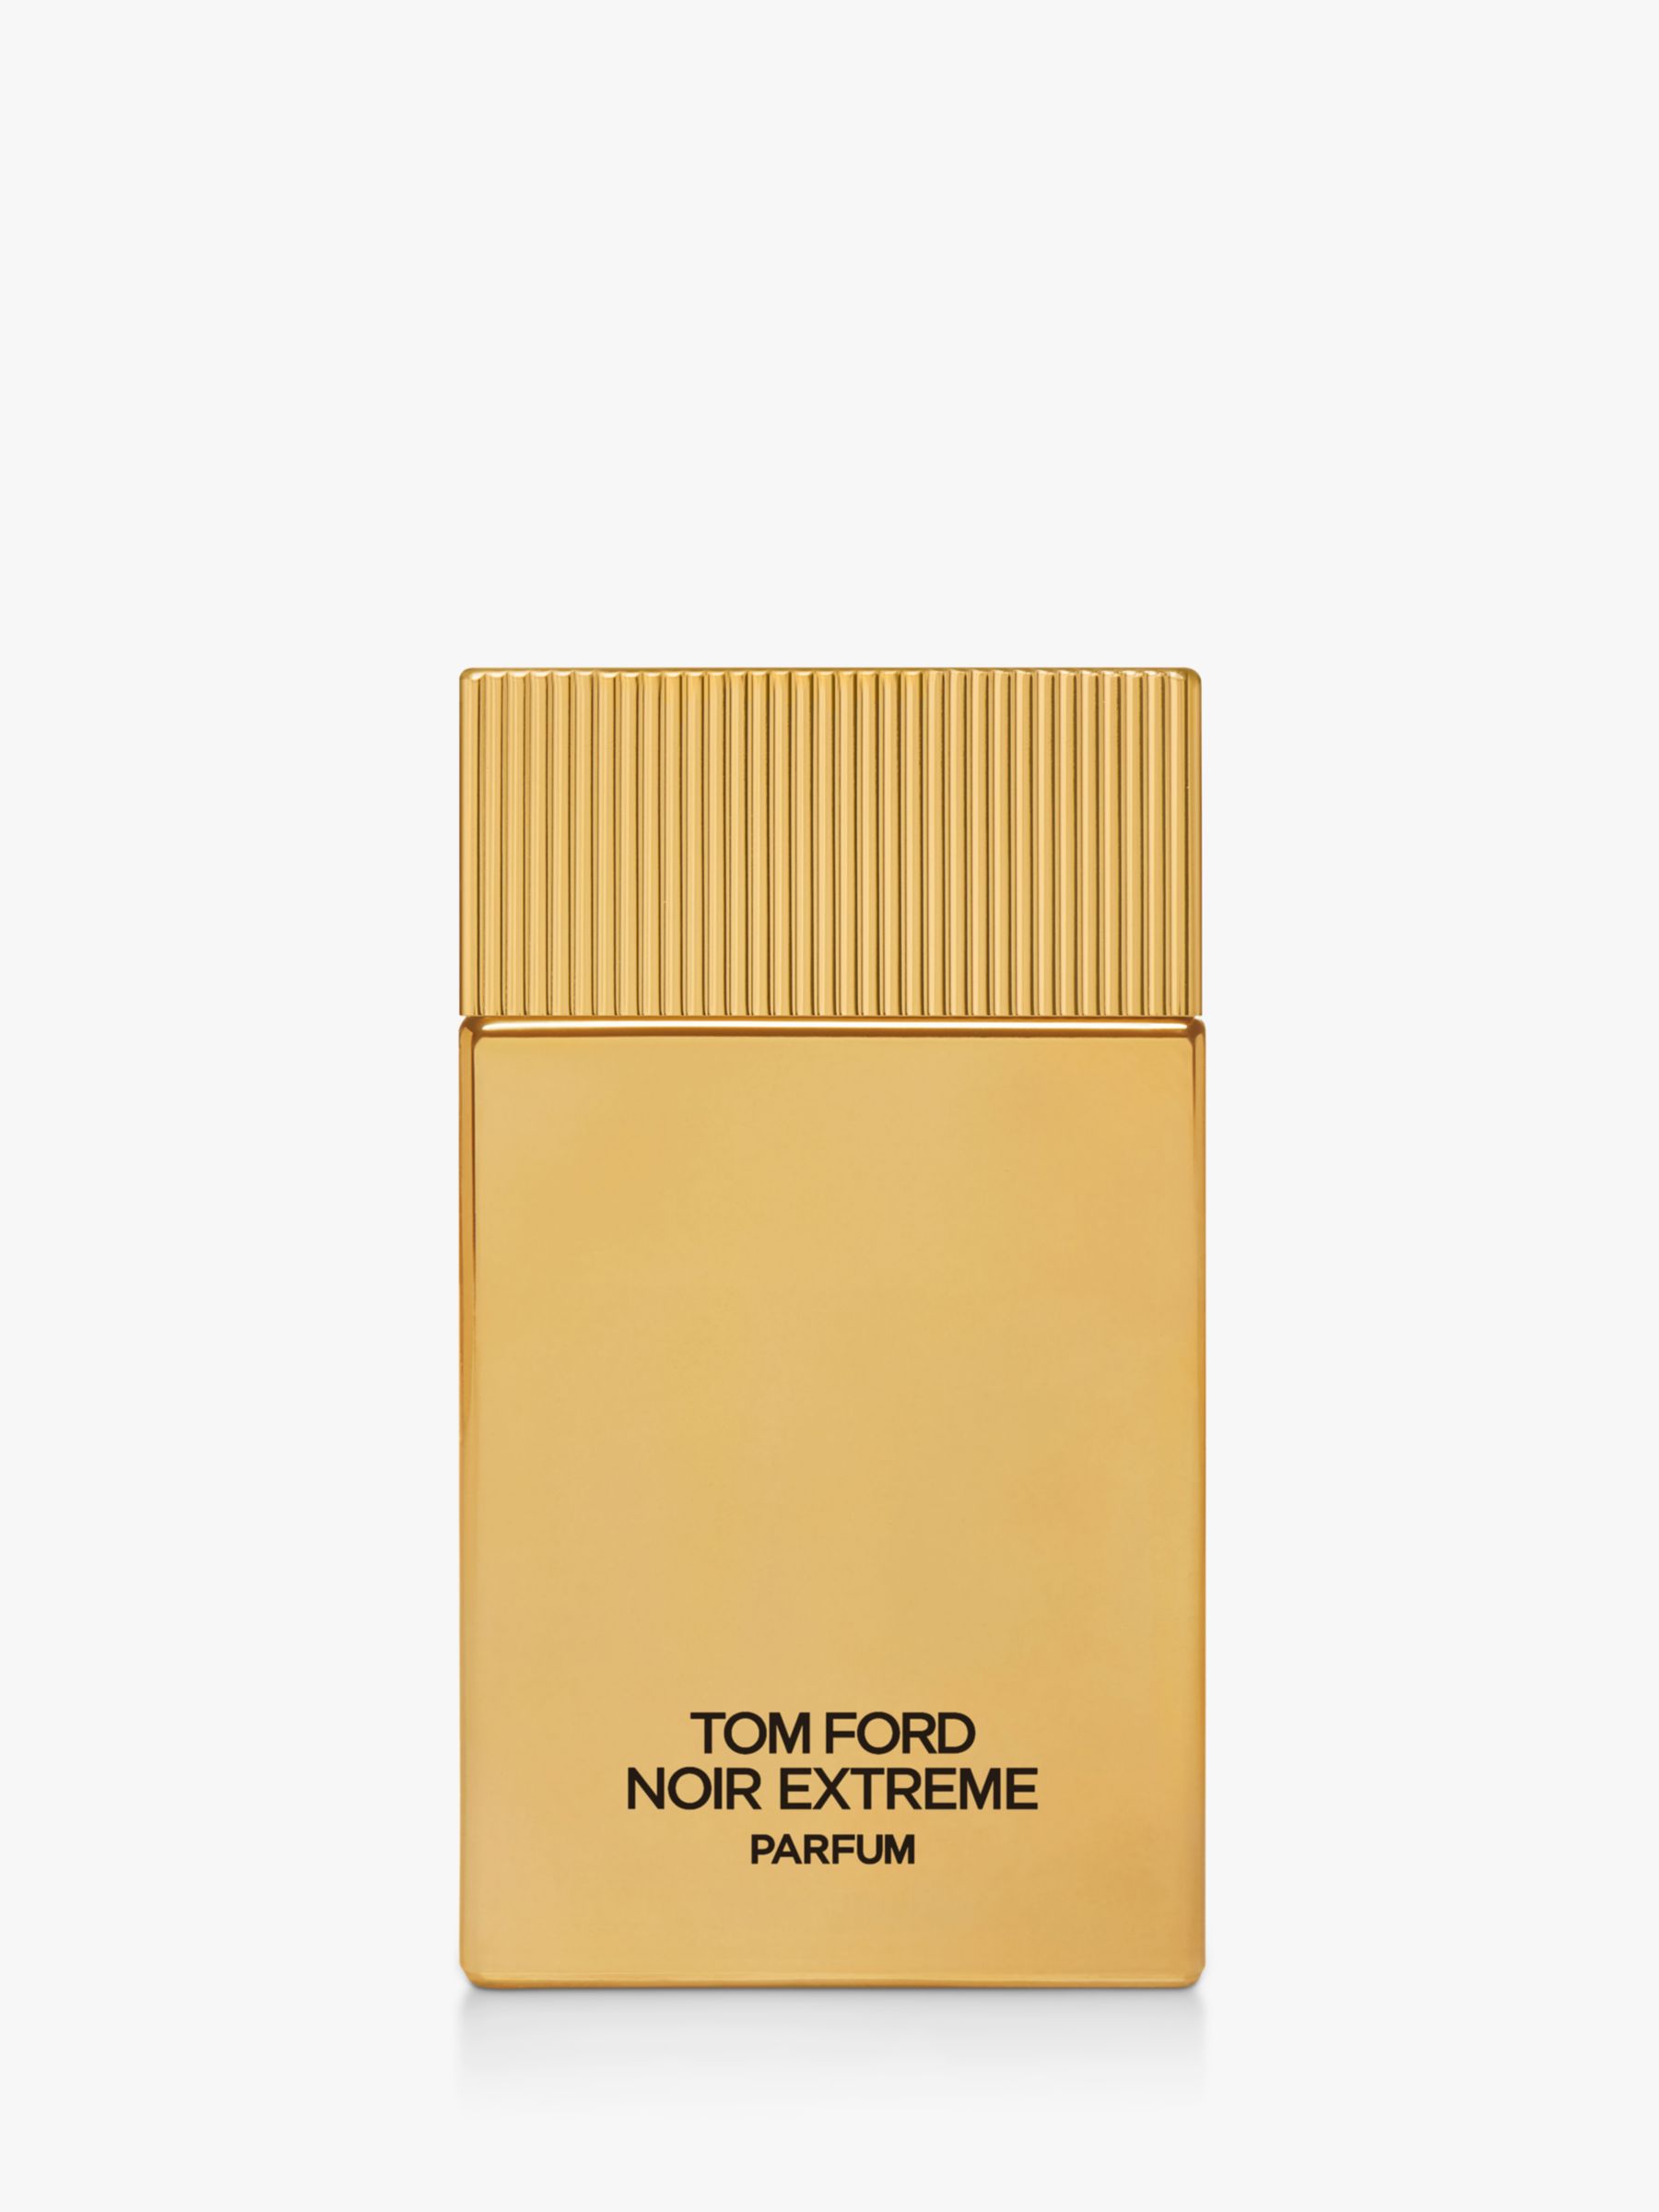 TOM FORD Noir Extreme Parfum, 100ml at John Lewis & Partners